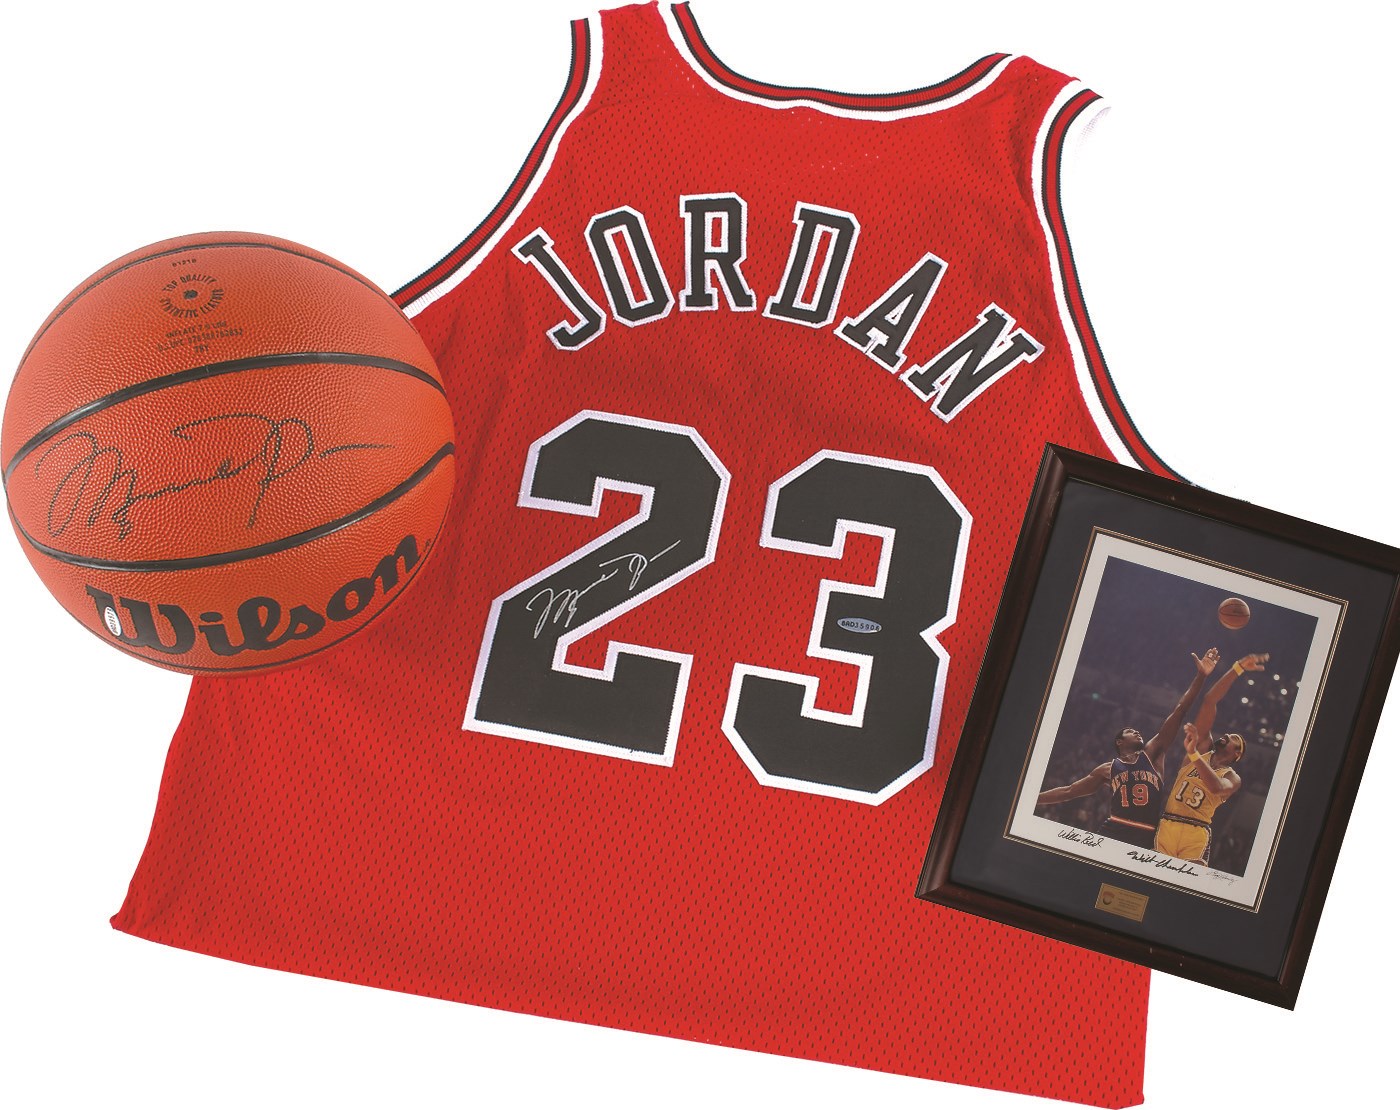 Michael Jordan & Wilt Chamberlain Autograph Collection - Jersey, Ball, Photos (UDA)